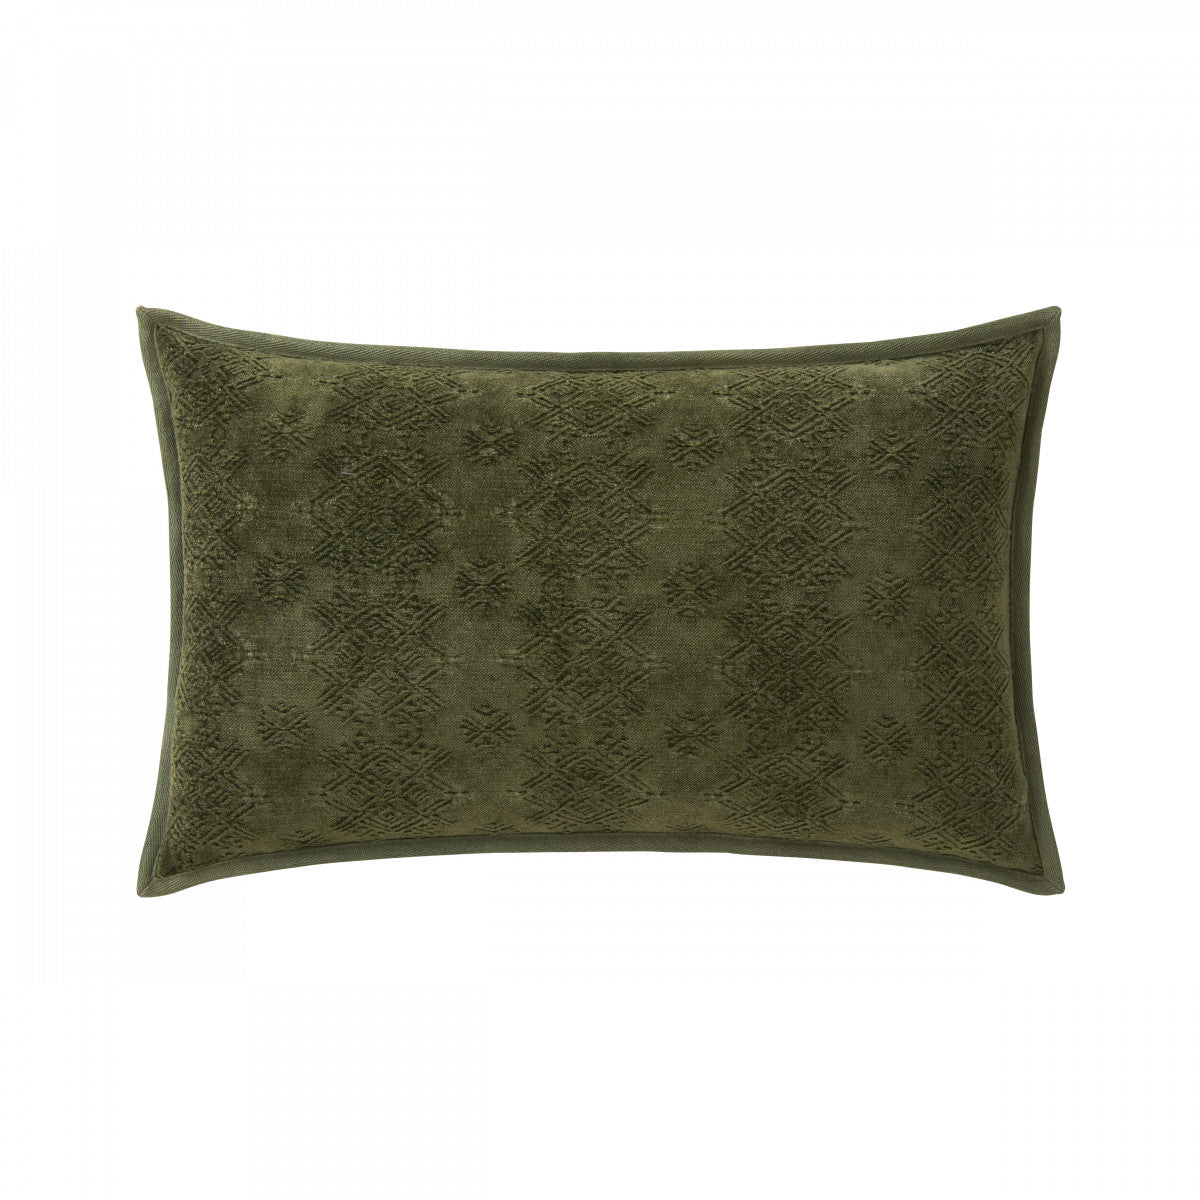 Syracuse Kaki Decorative Pillow by Iosis | Fig Linens